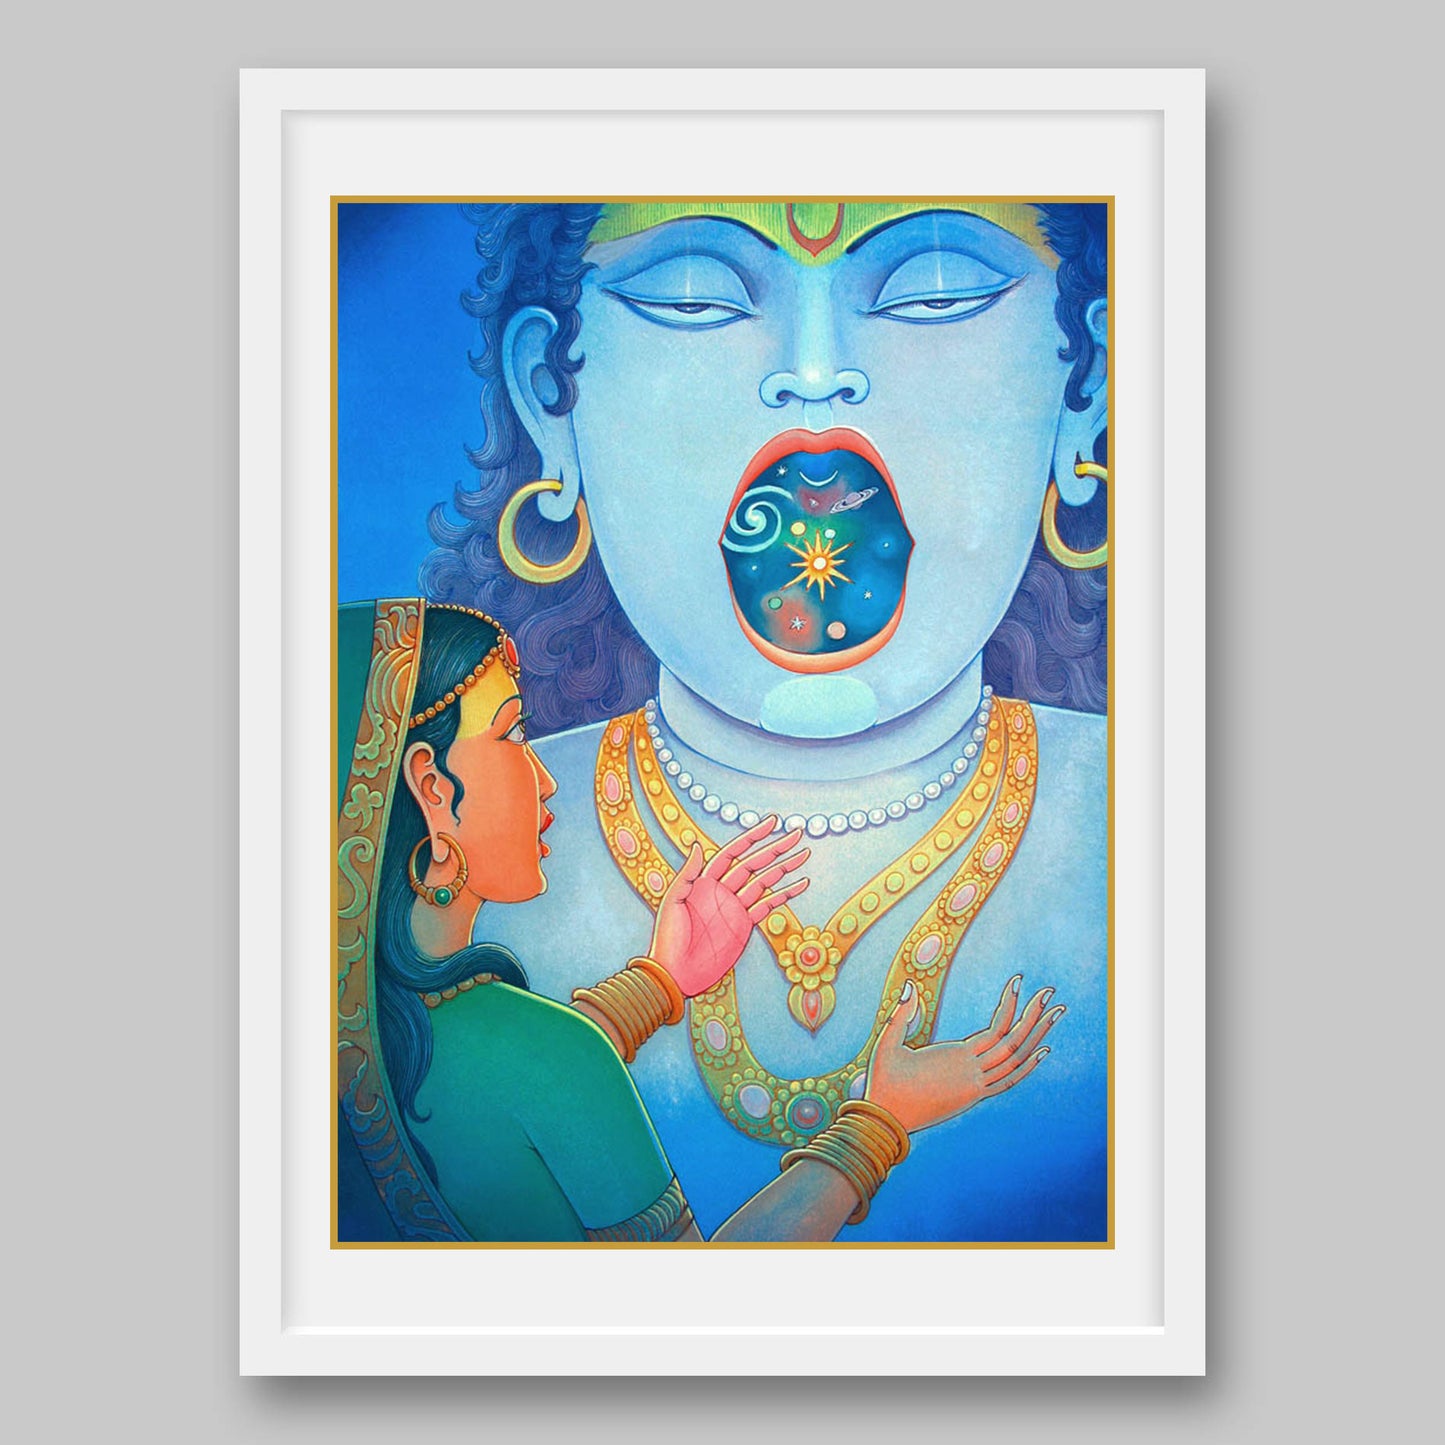 Krishna and Yashoda - High Quality Print of Artwork by Pieter Weltevrede